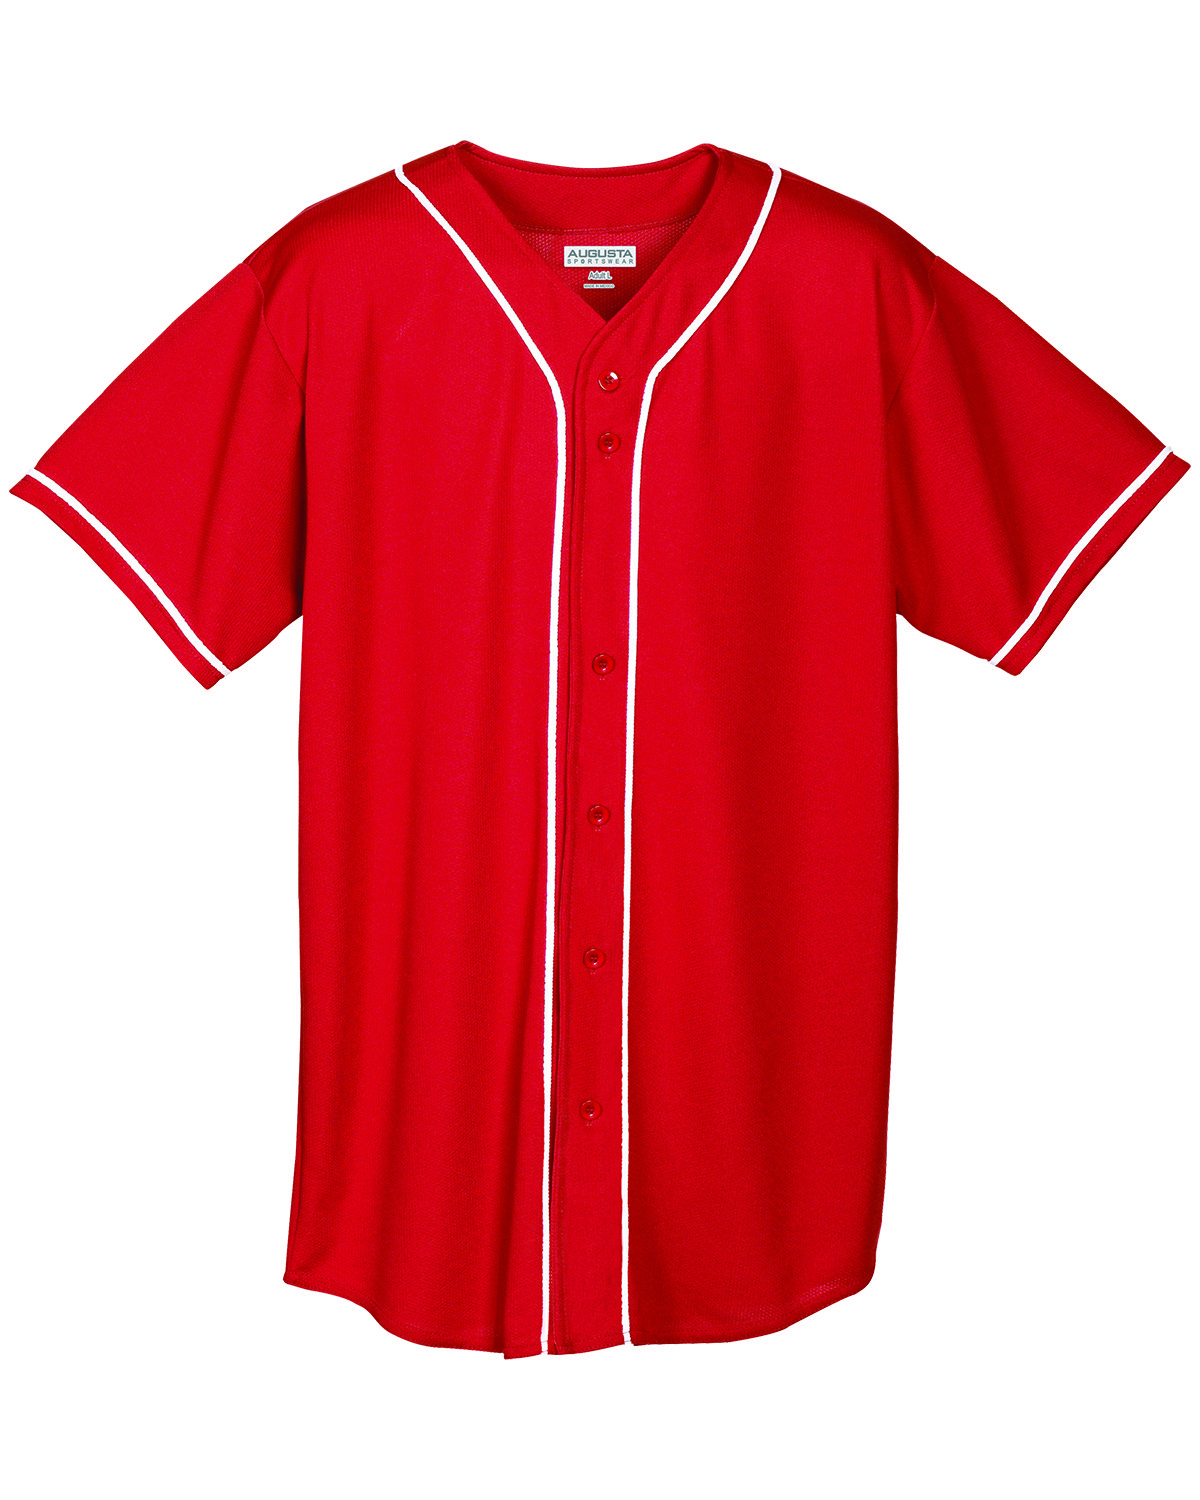 Baseball Jerseys for sale in Vanna, Georgia